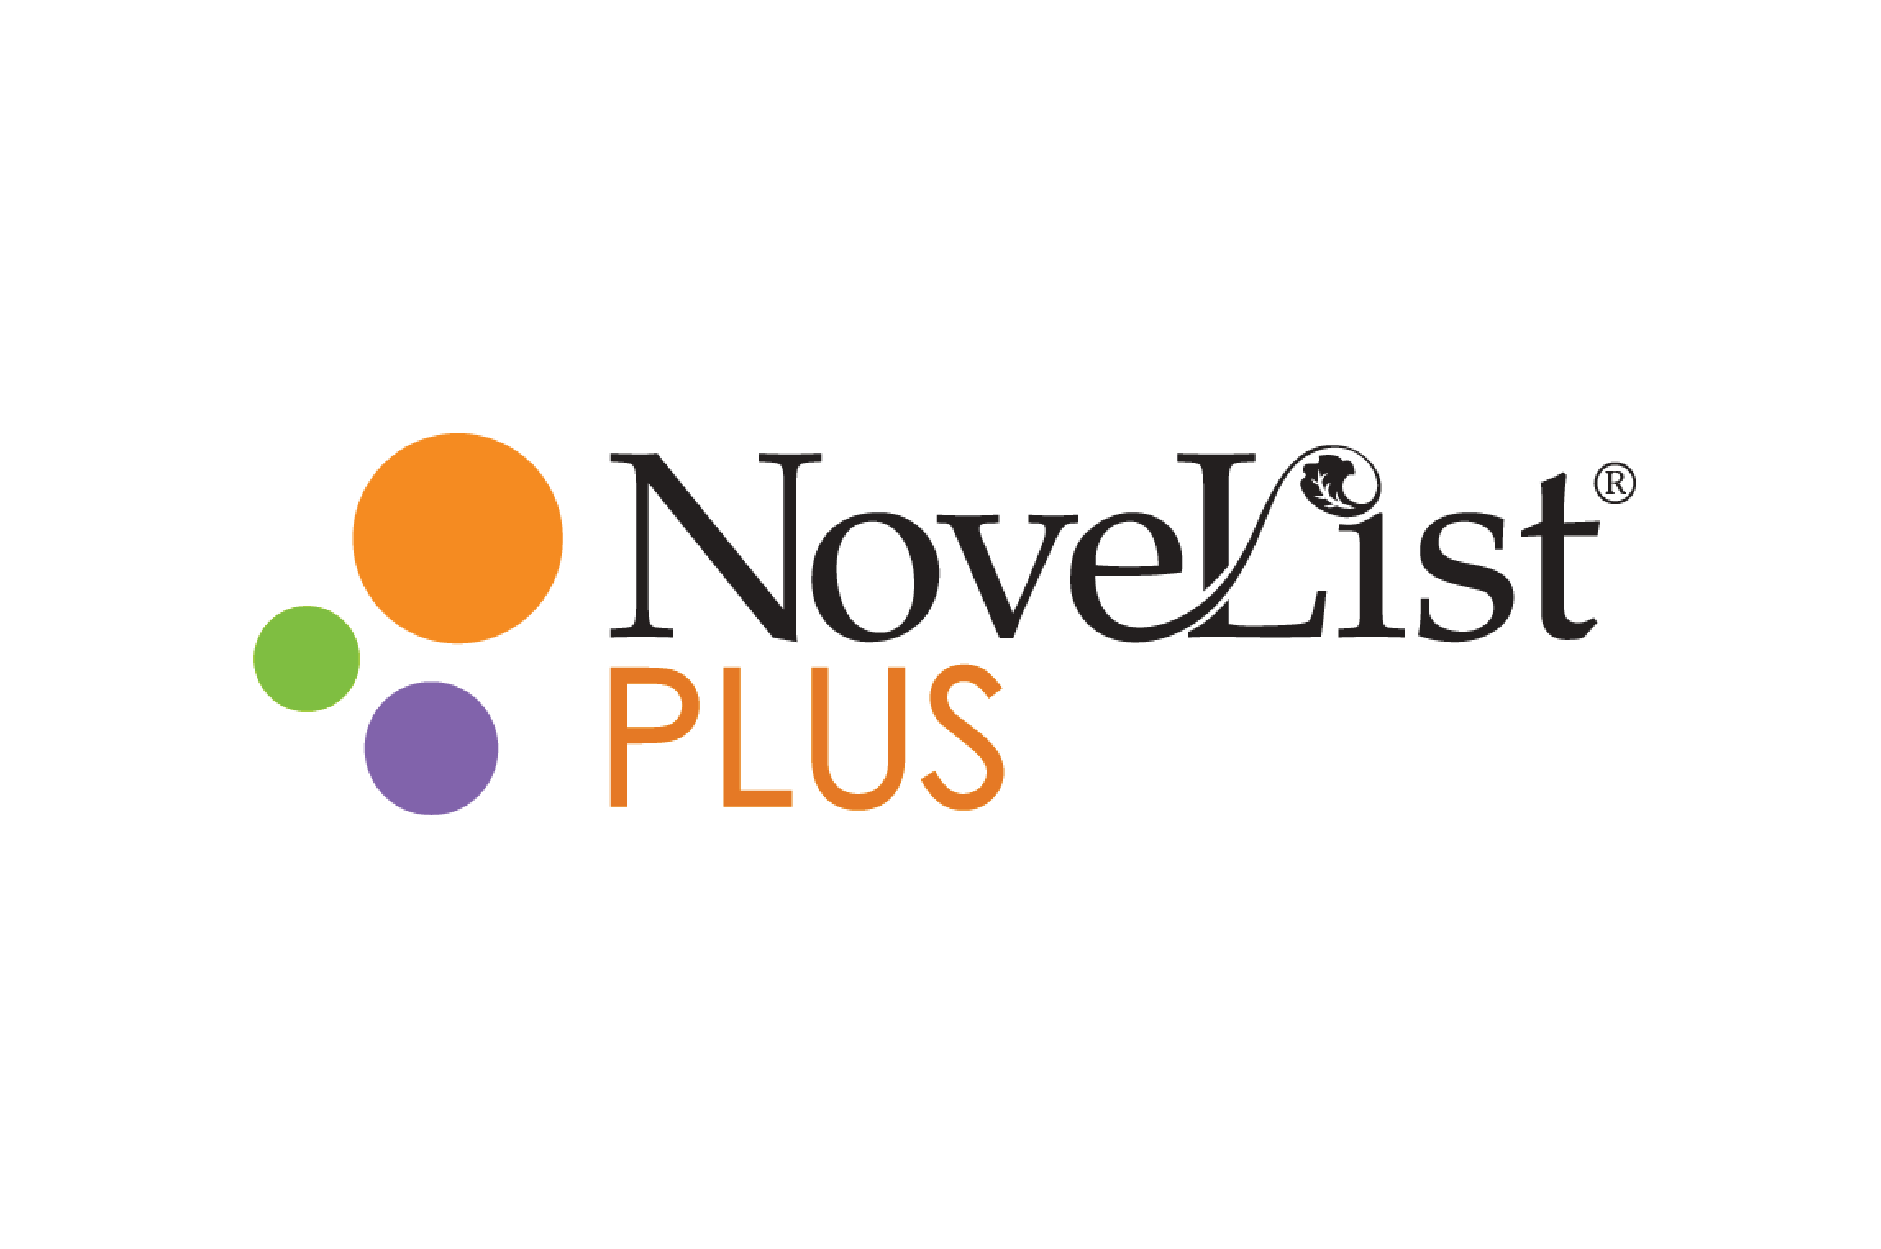 NoveList Plus logo